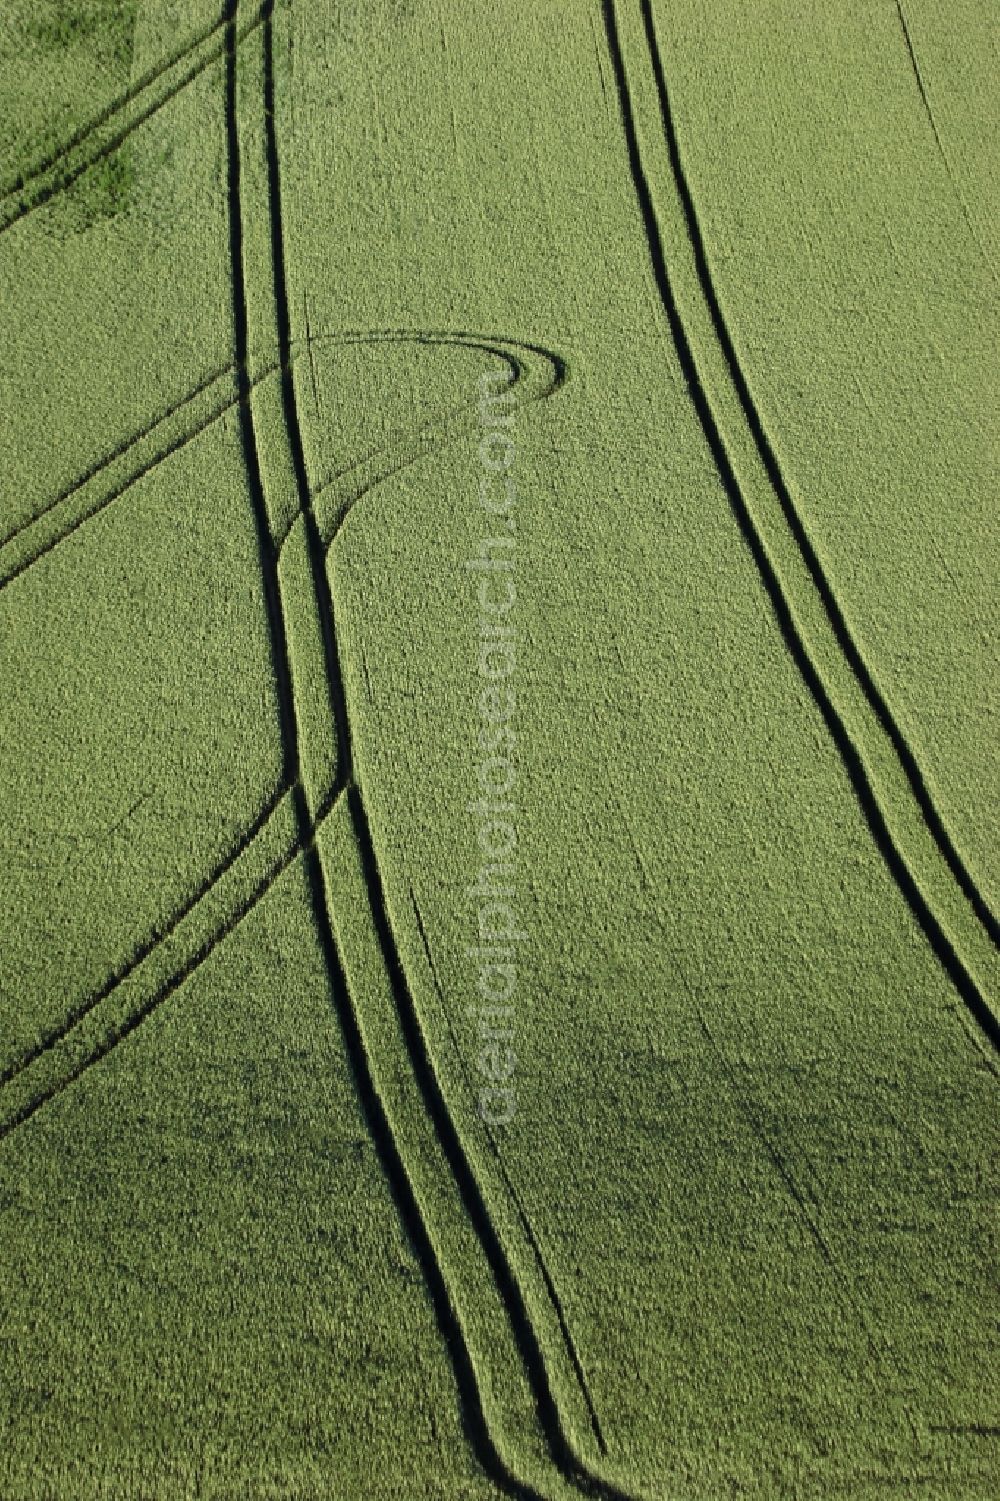 Felm from the bird's eye view: Lanes in cornfield in Altenholz in Schleswig-Holstein